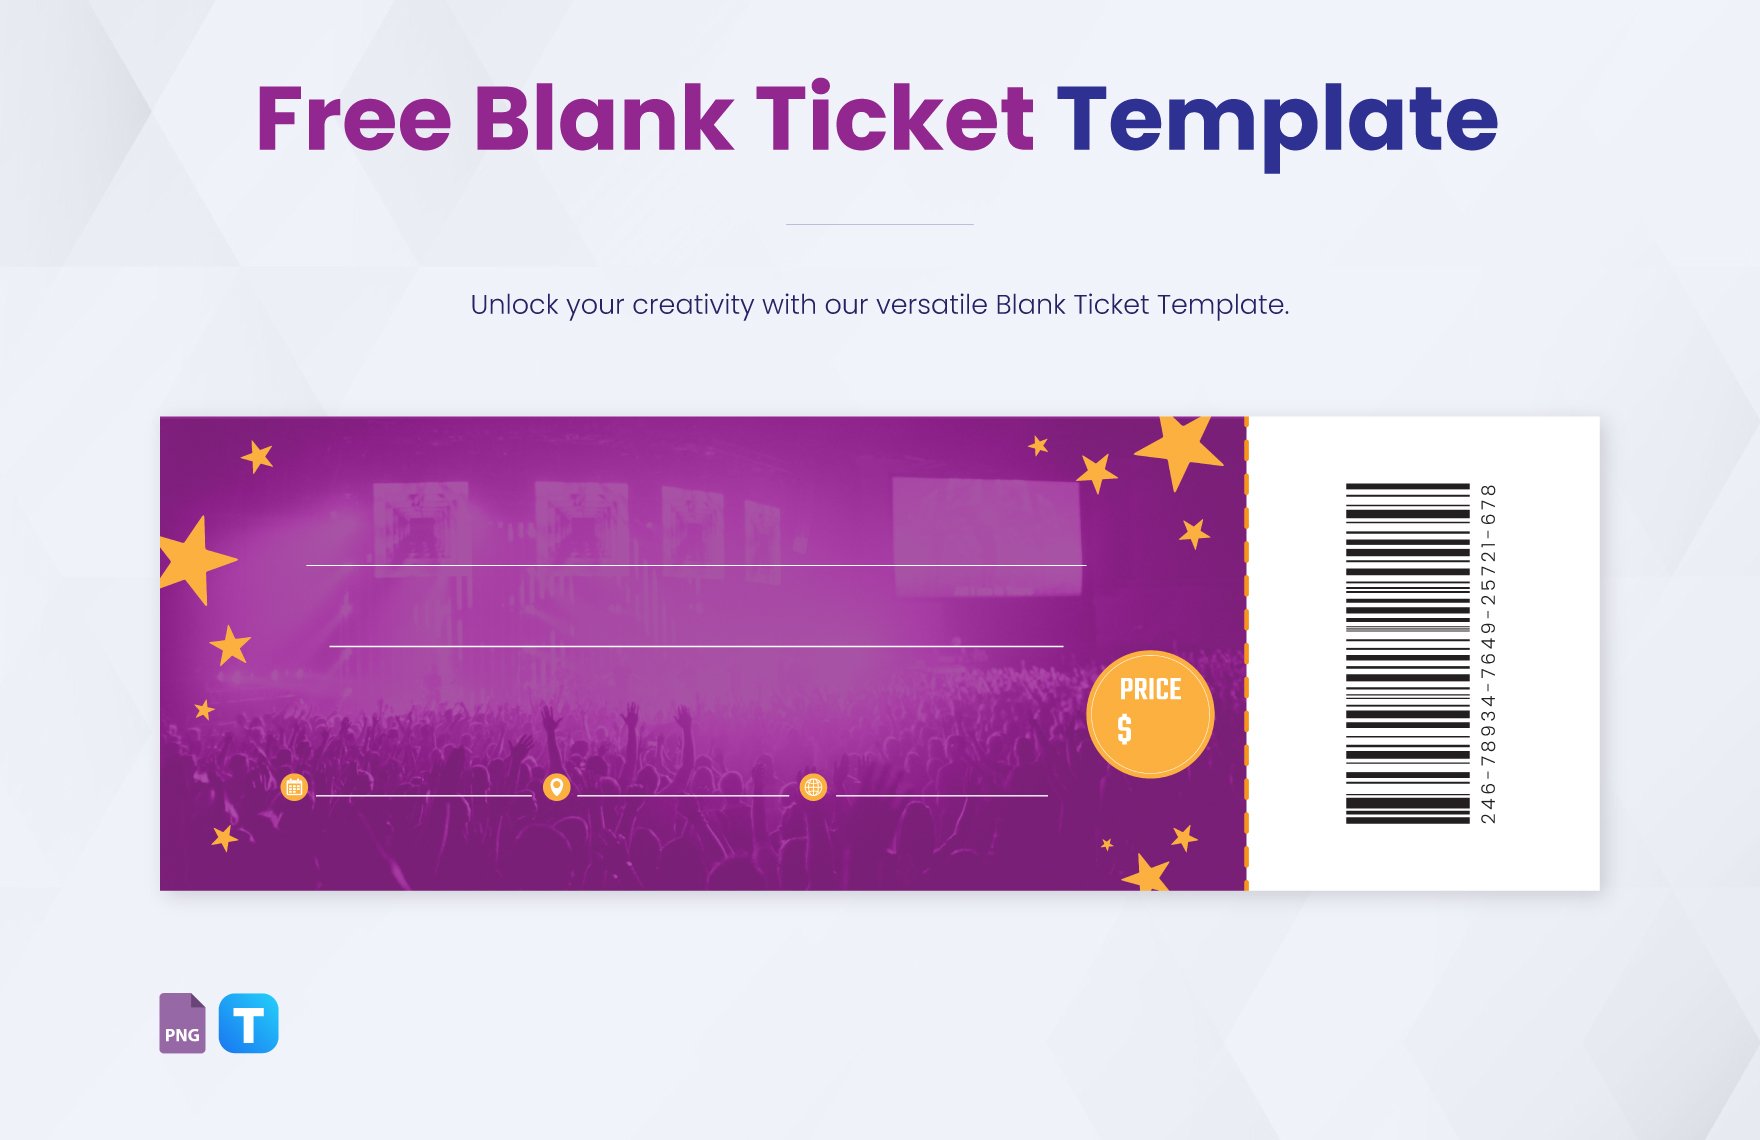 Empty ticket template. Blank concert ticket or - Stock